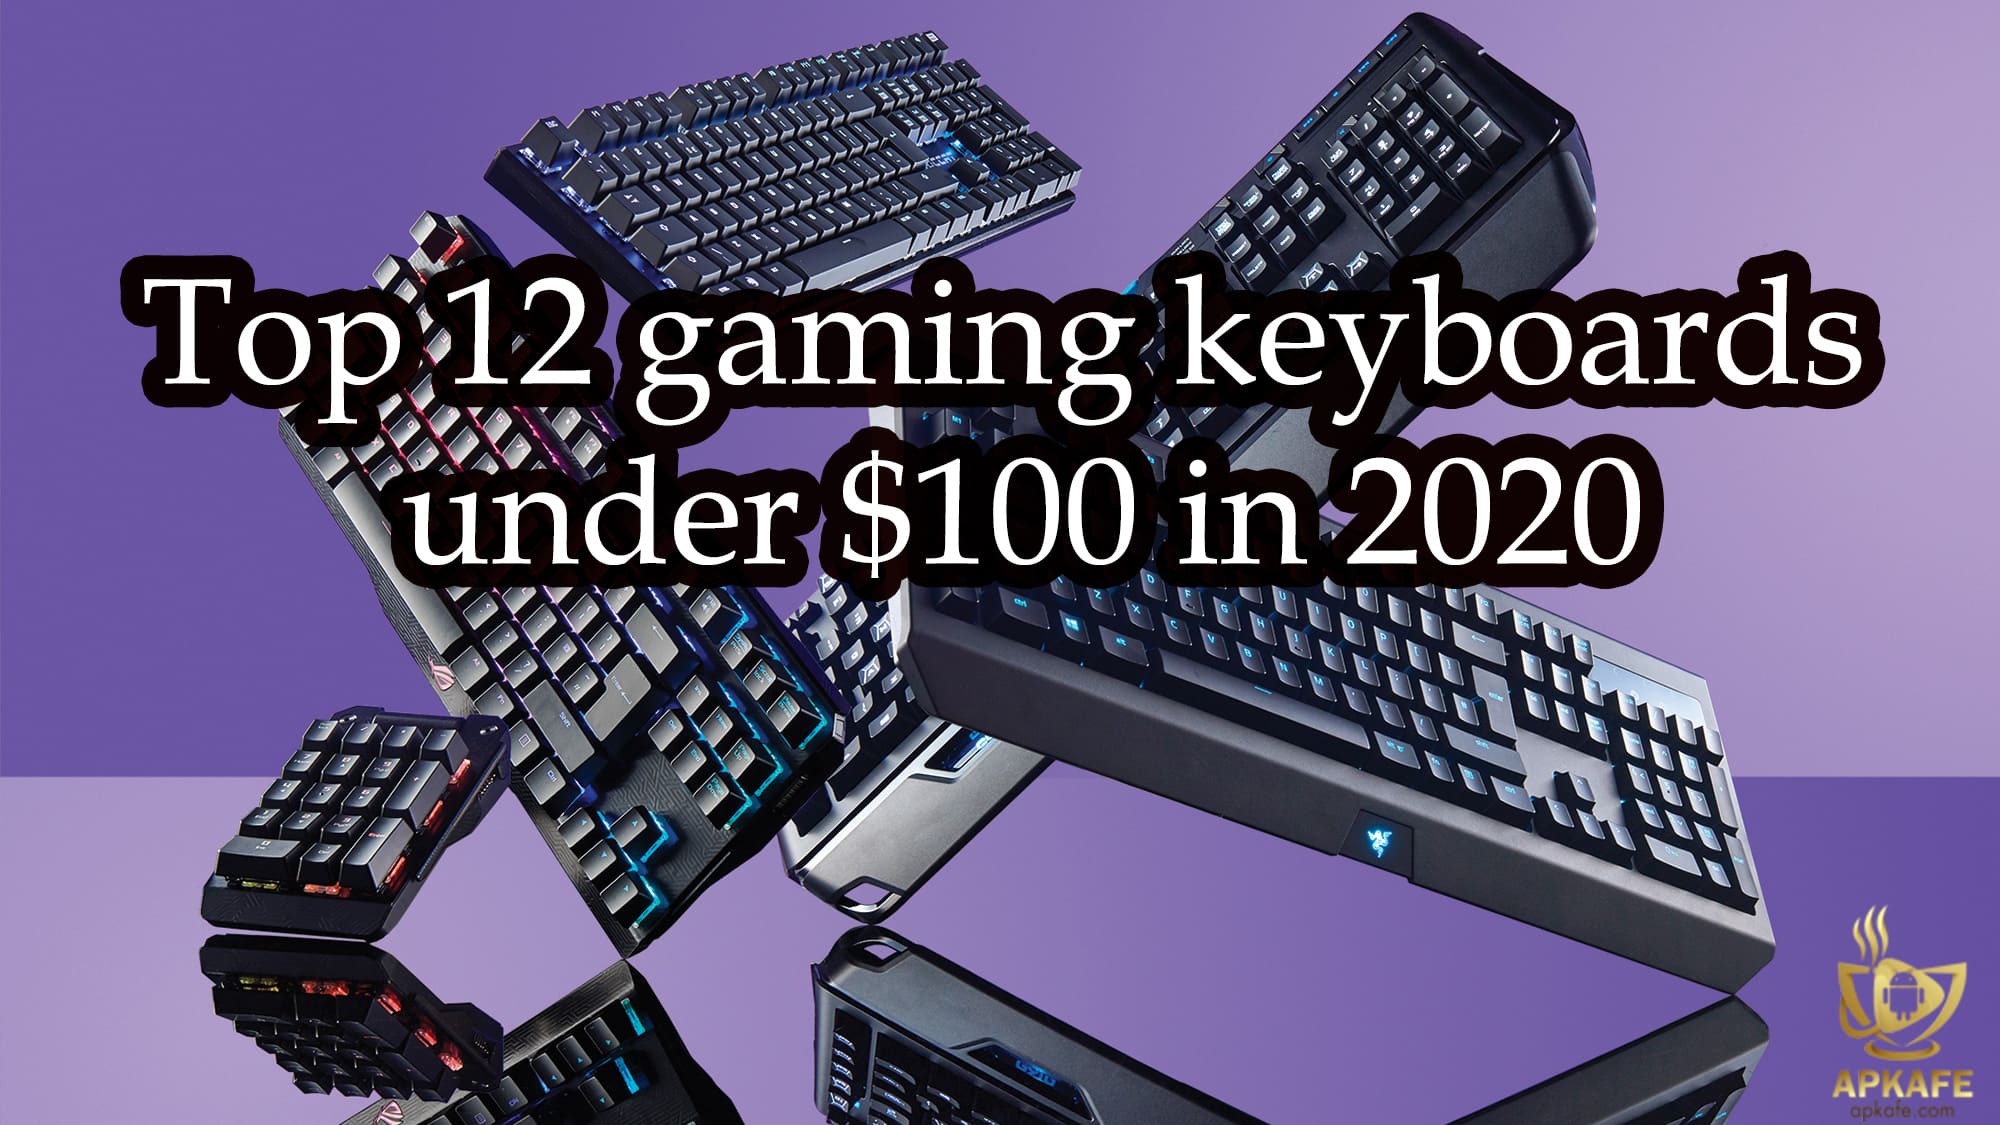 Top 12 gaming keyboards under $100 in 2020